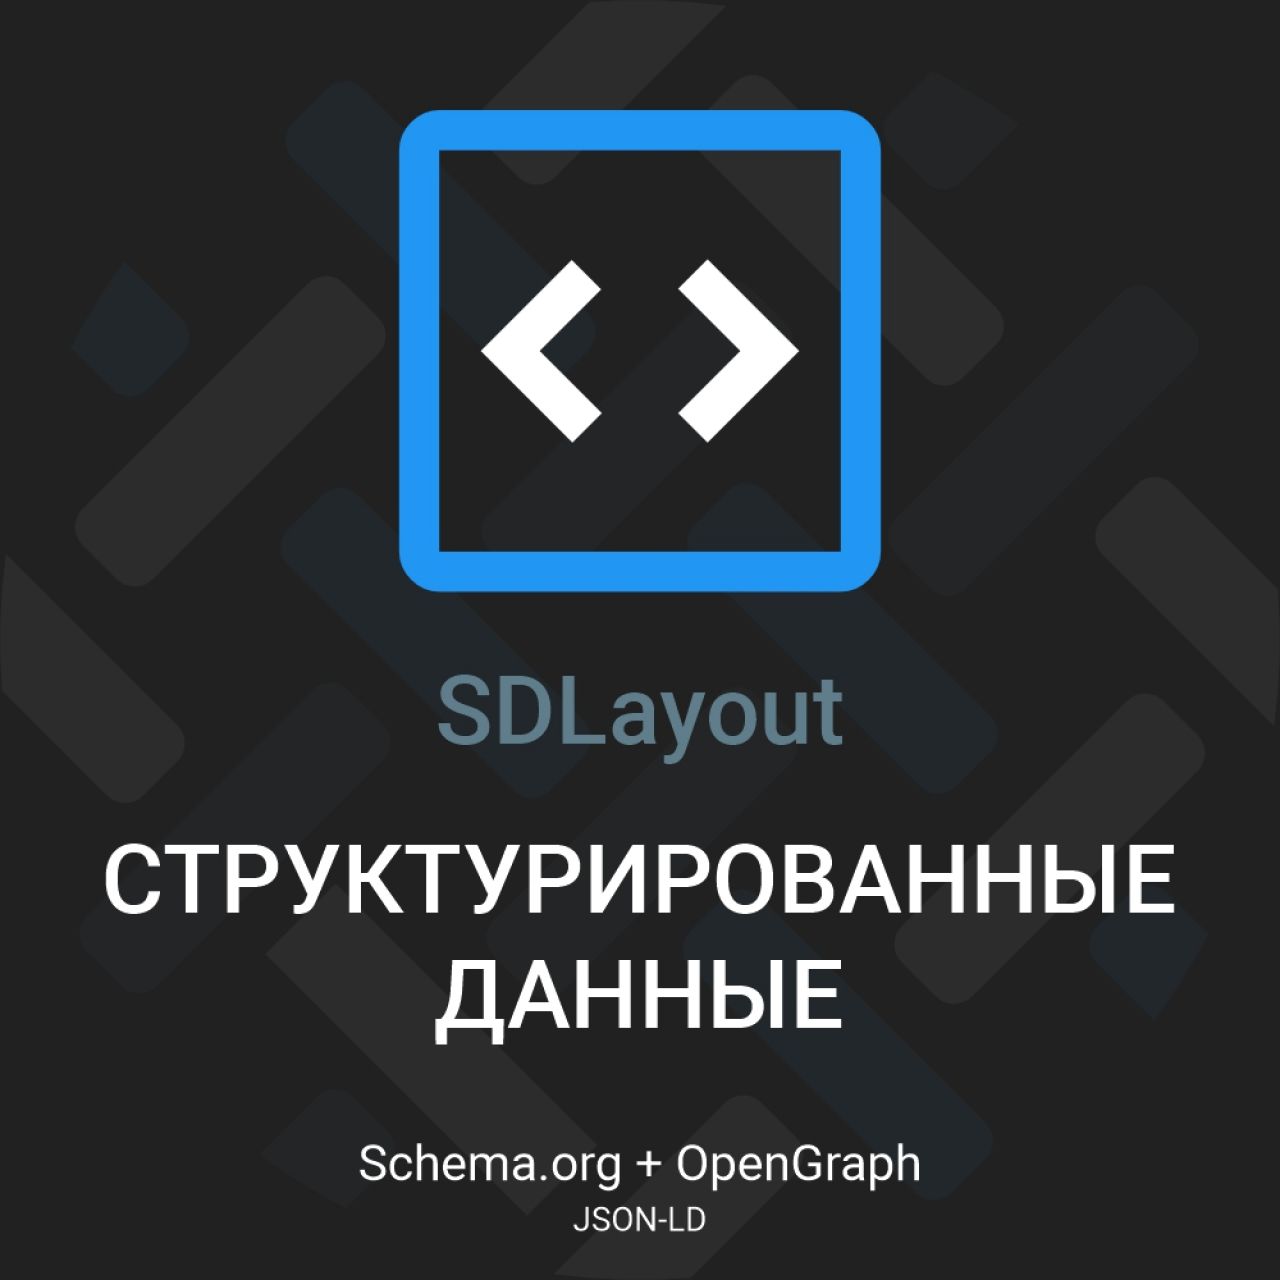 [TRD] SDLayout - Микроразметка Schema.org + Open Graph из категории SEO, карта сайта, оптимизация для CMS OpenCart (ОпенКарт)